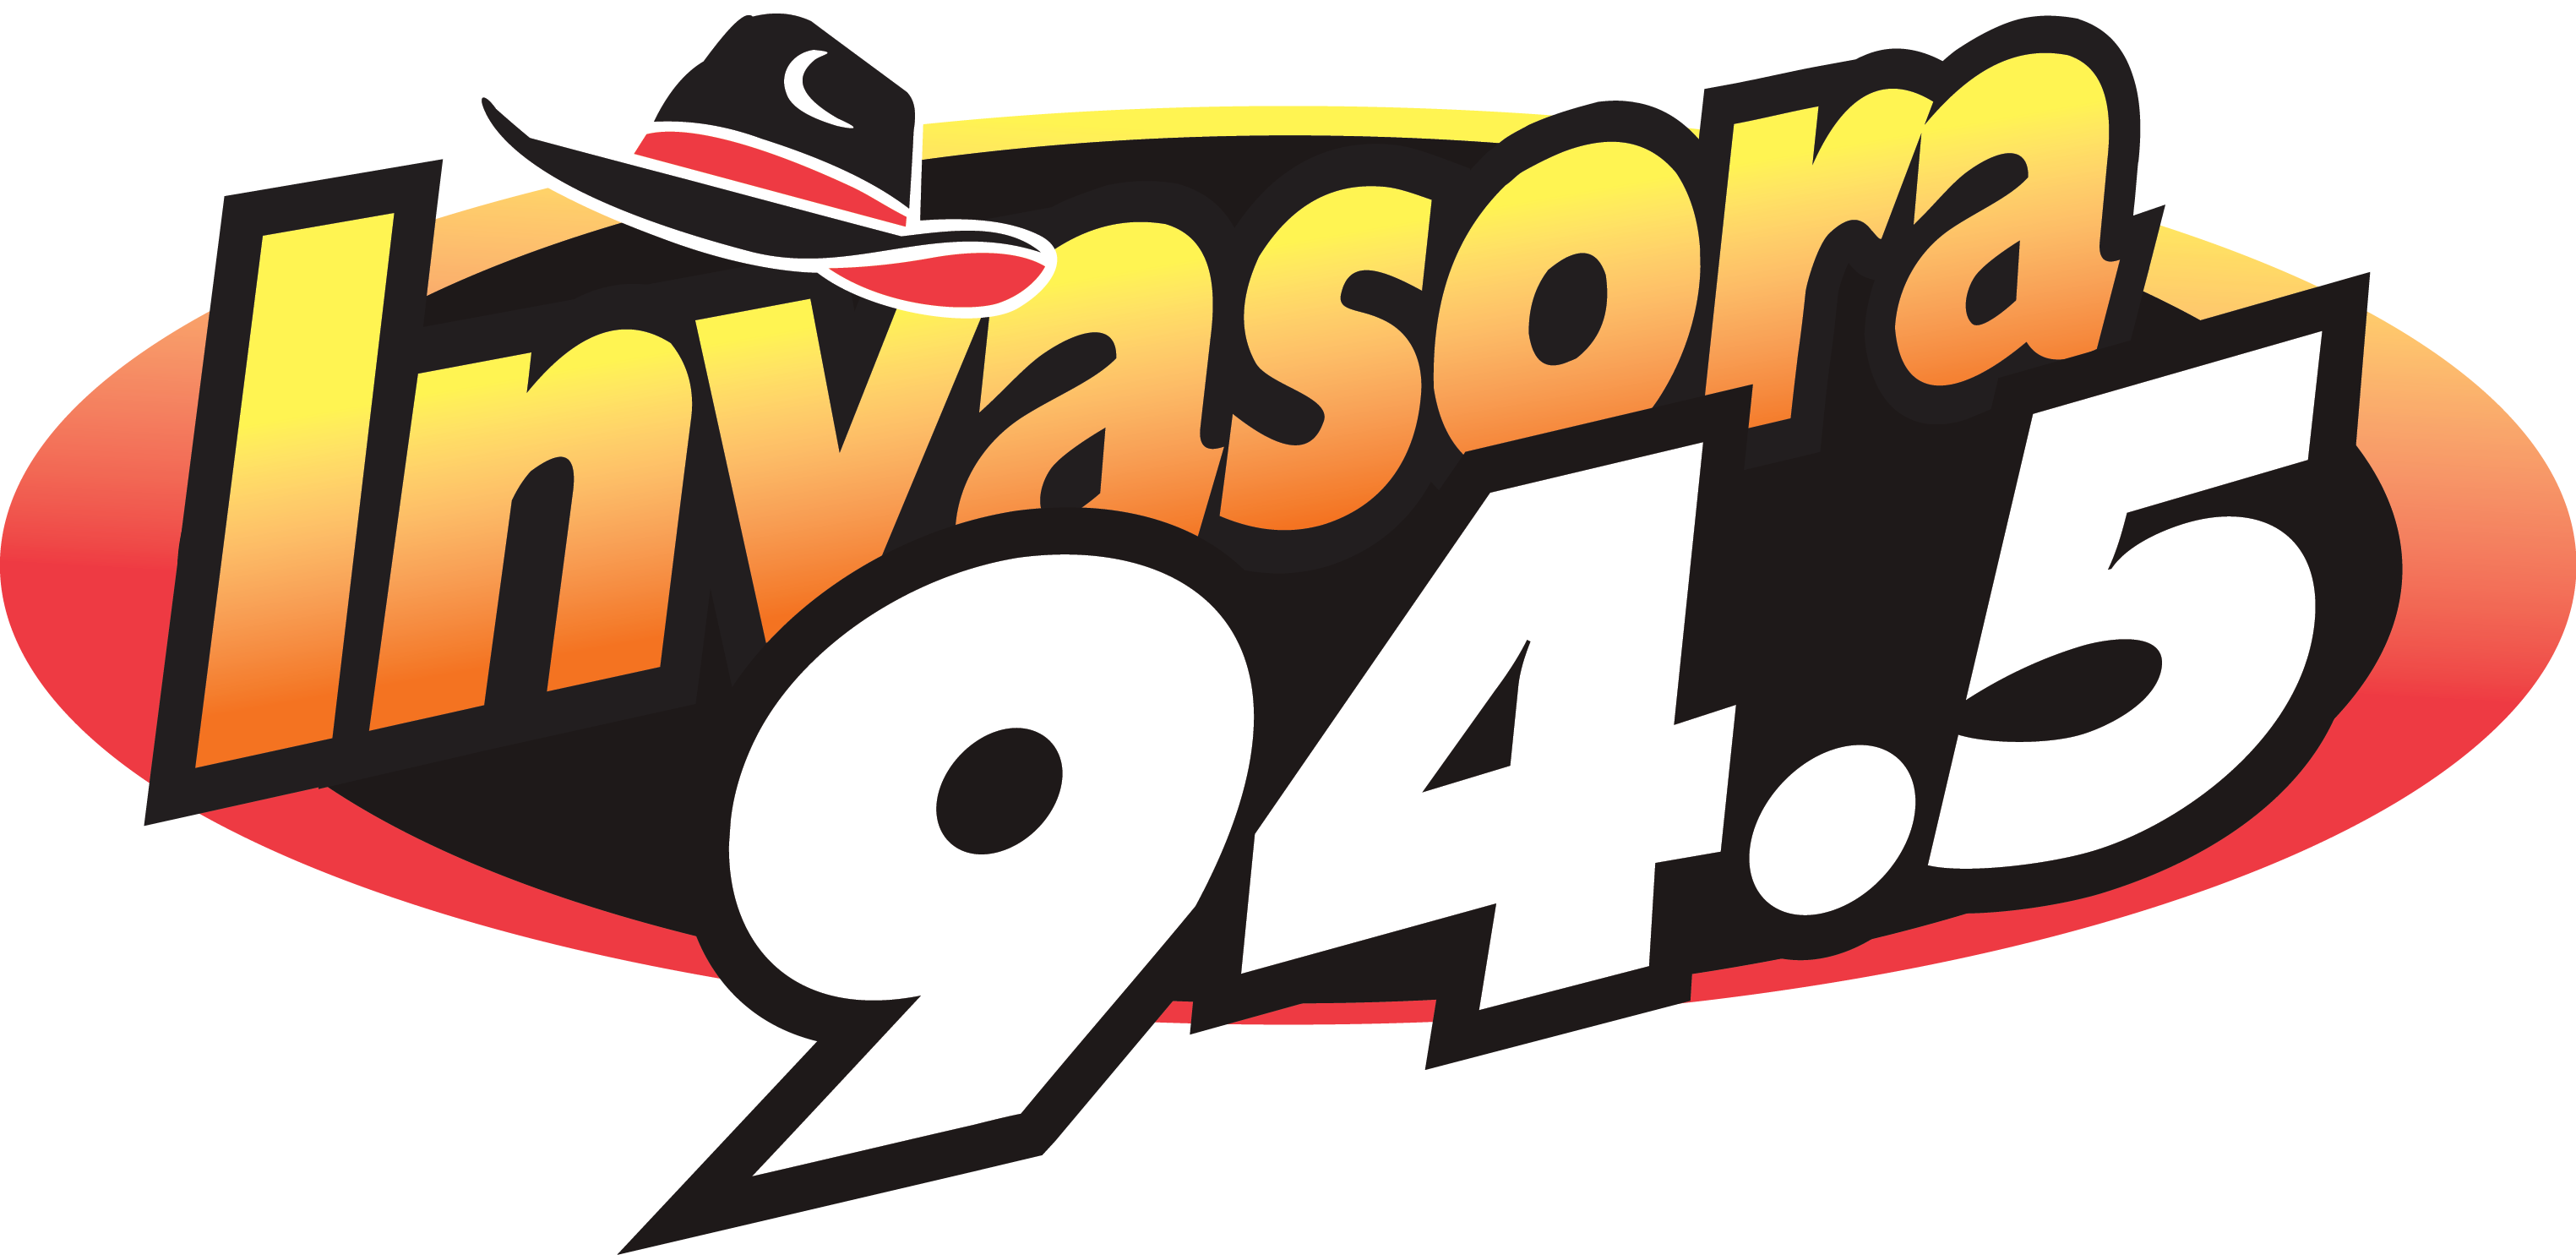 Invasora945